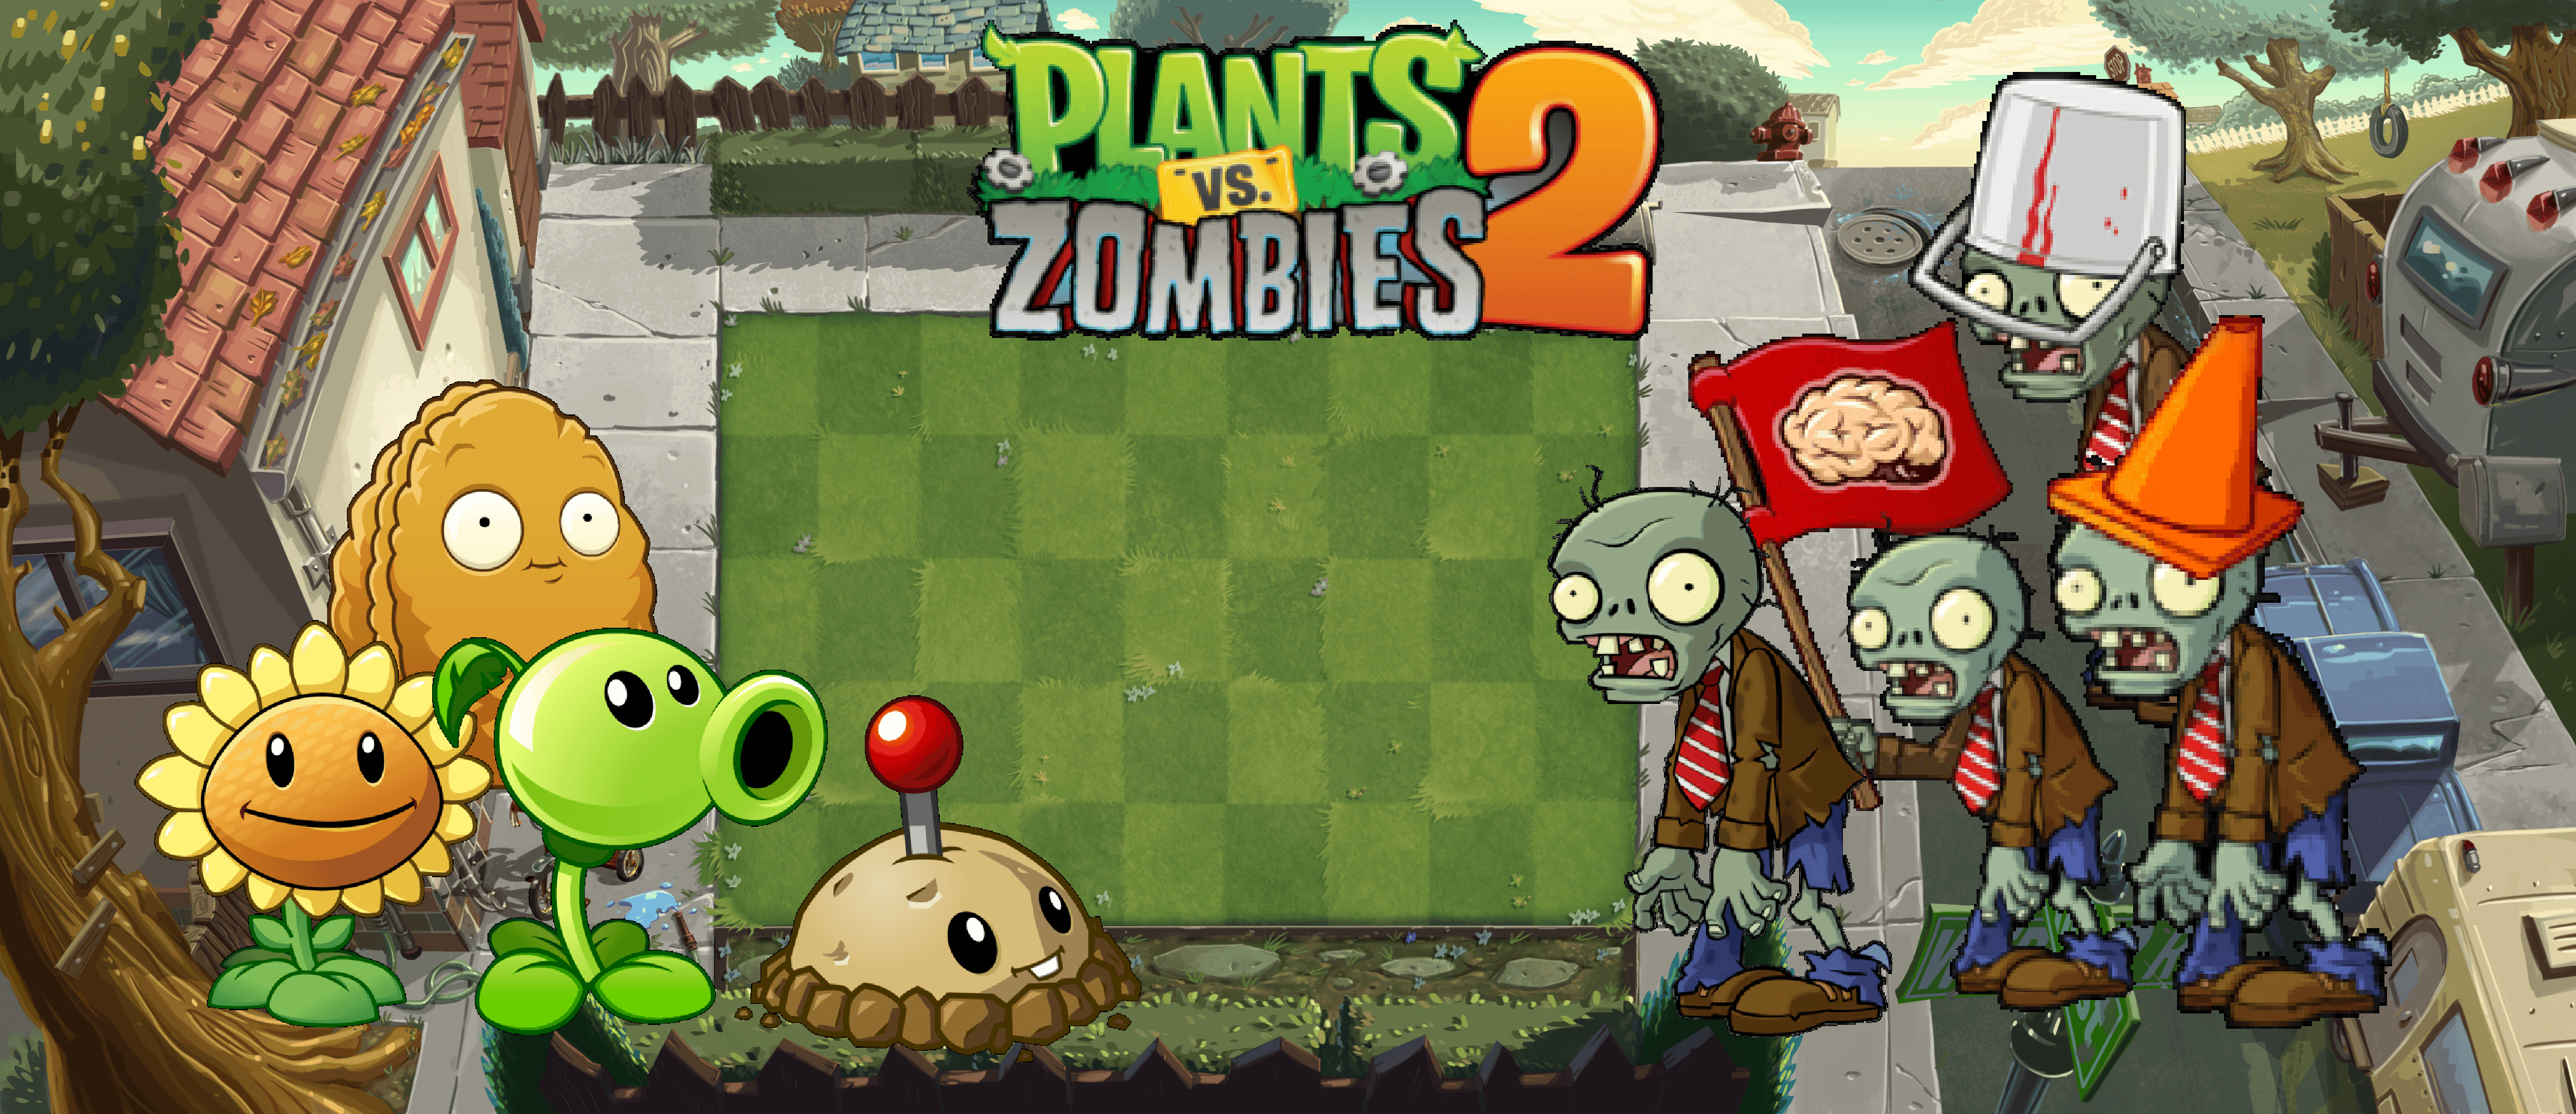 Plants vs. zombies: альманах садовода – список растений